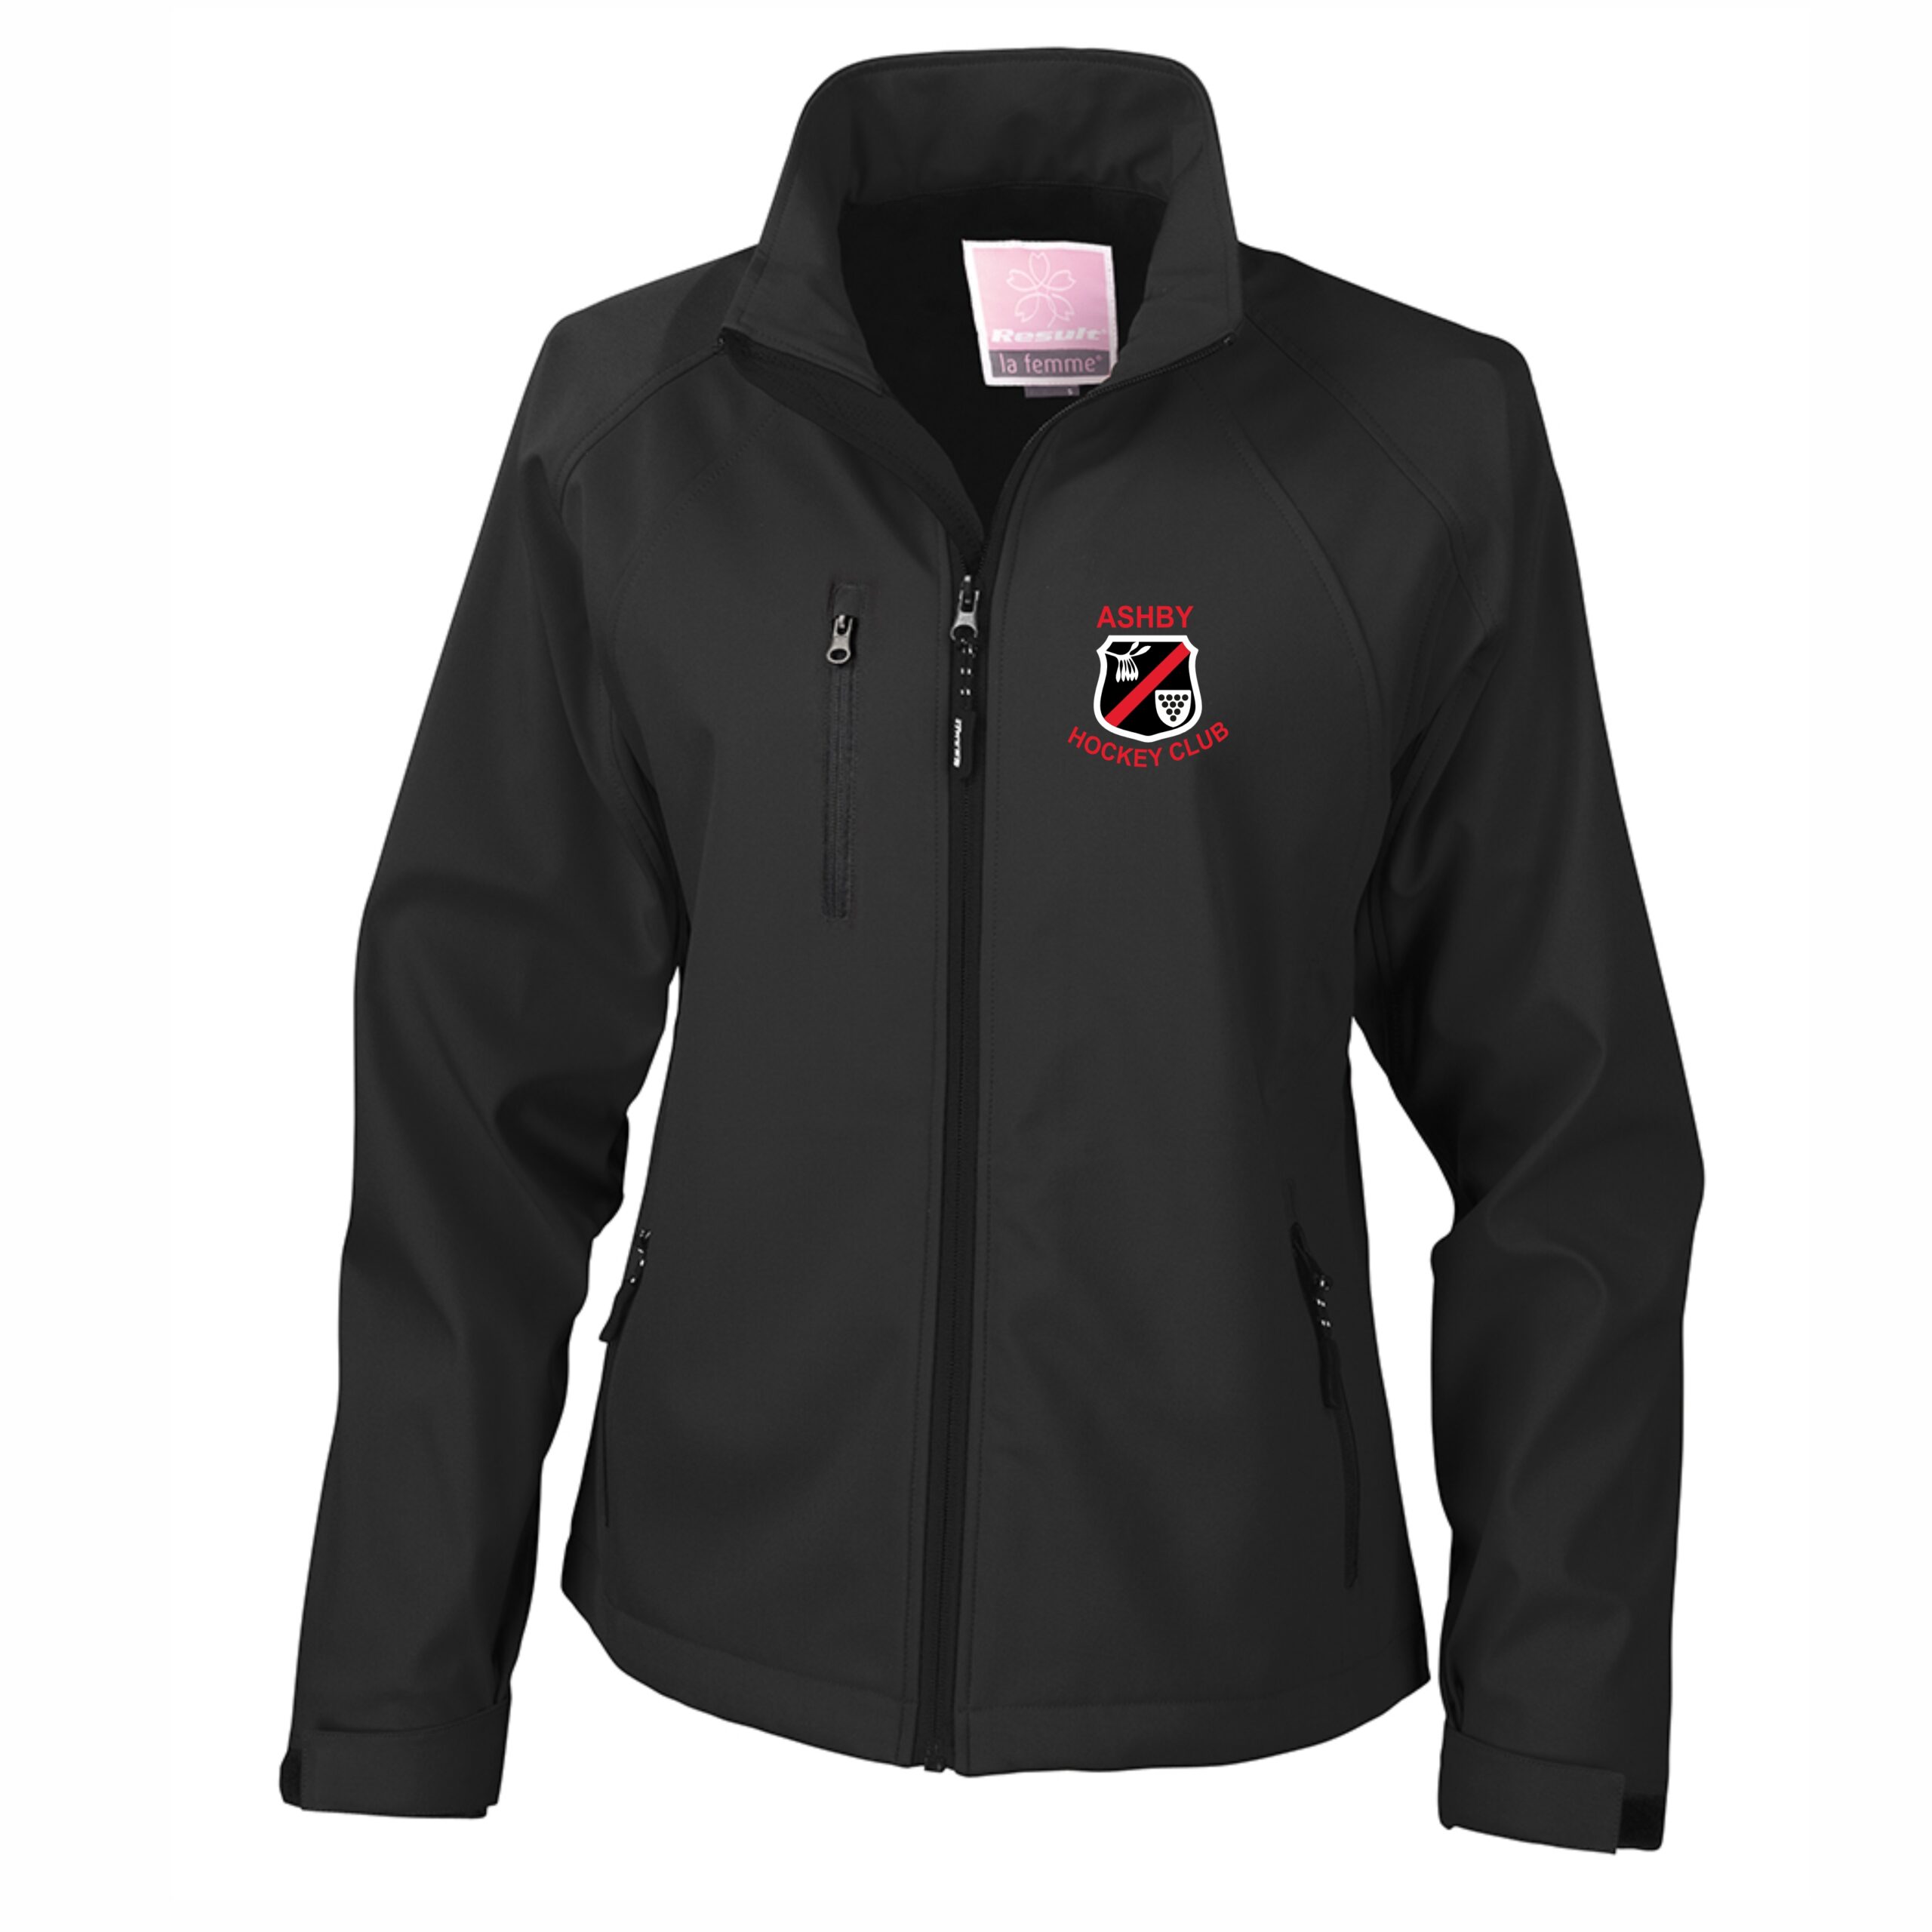 Embroidered Hooded Jacket - Black/Athletic Club - Ladies